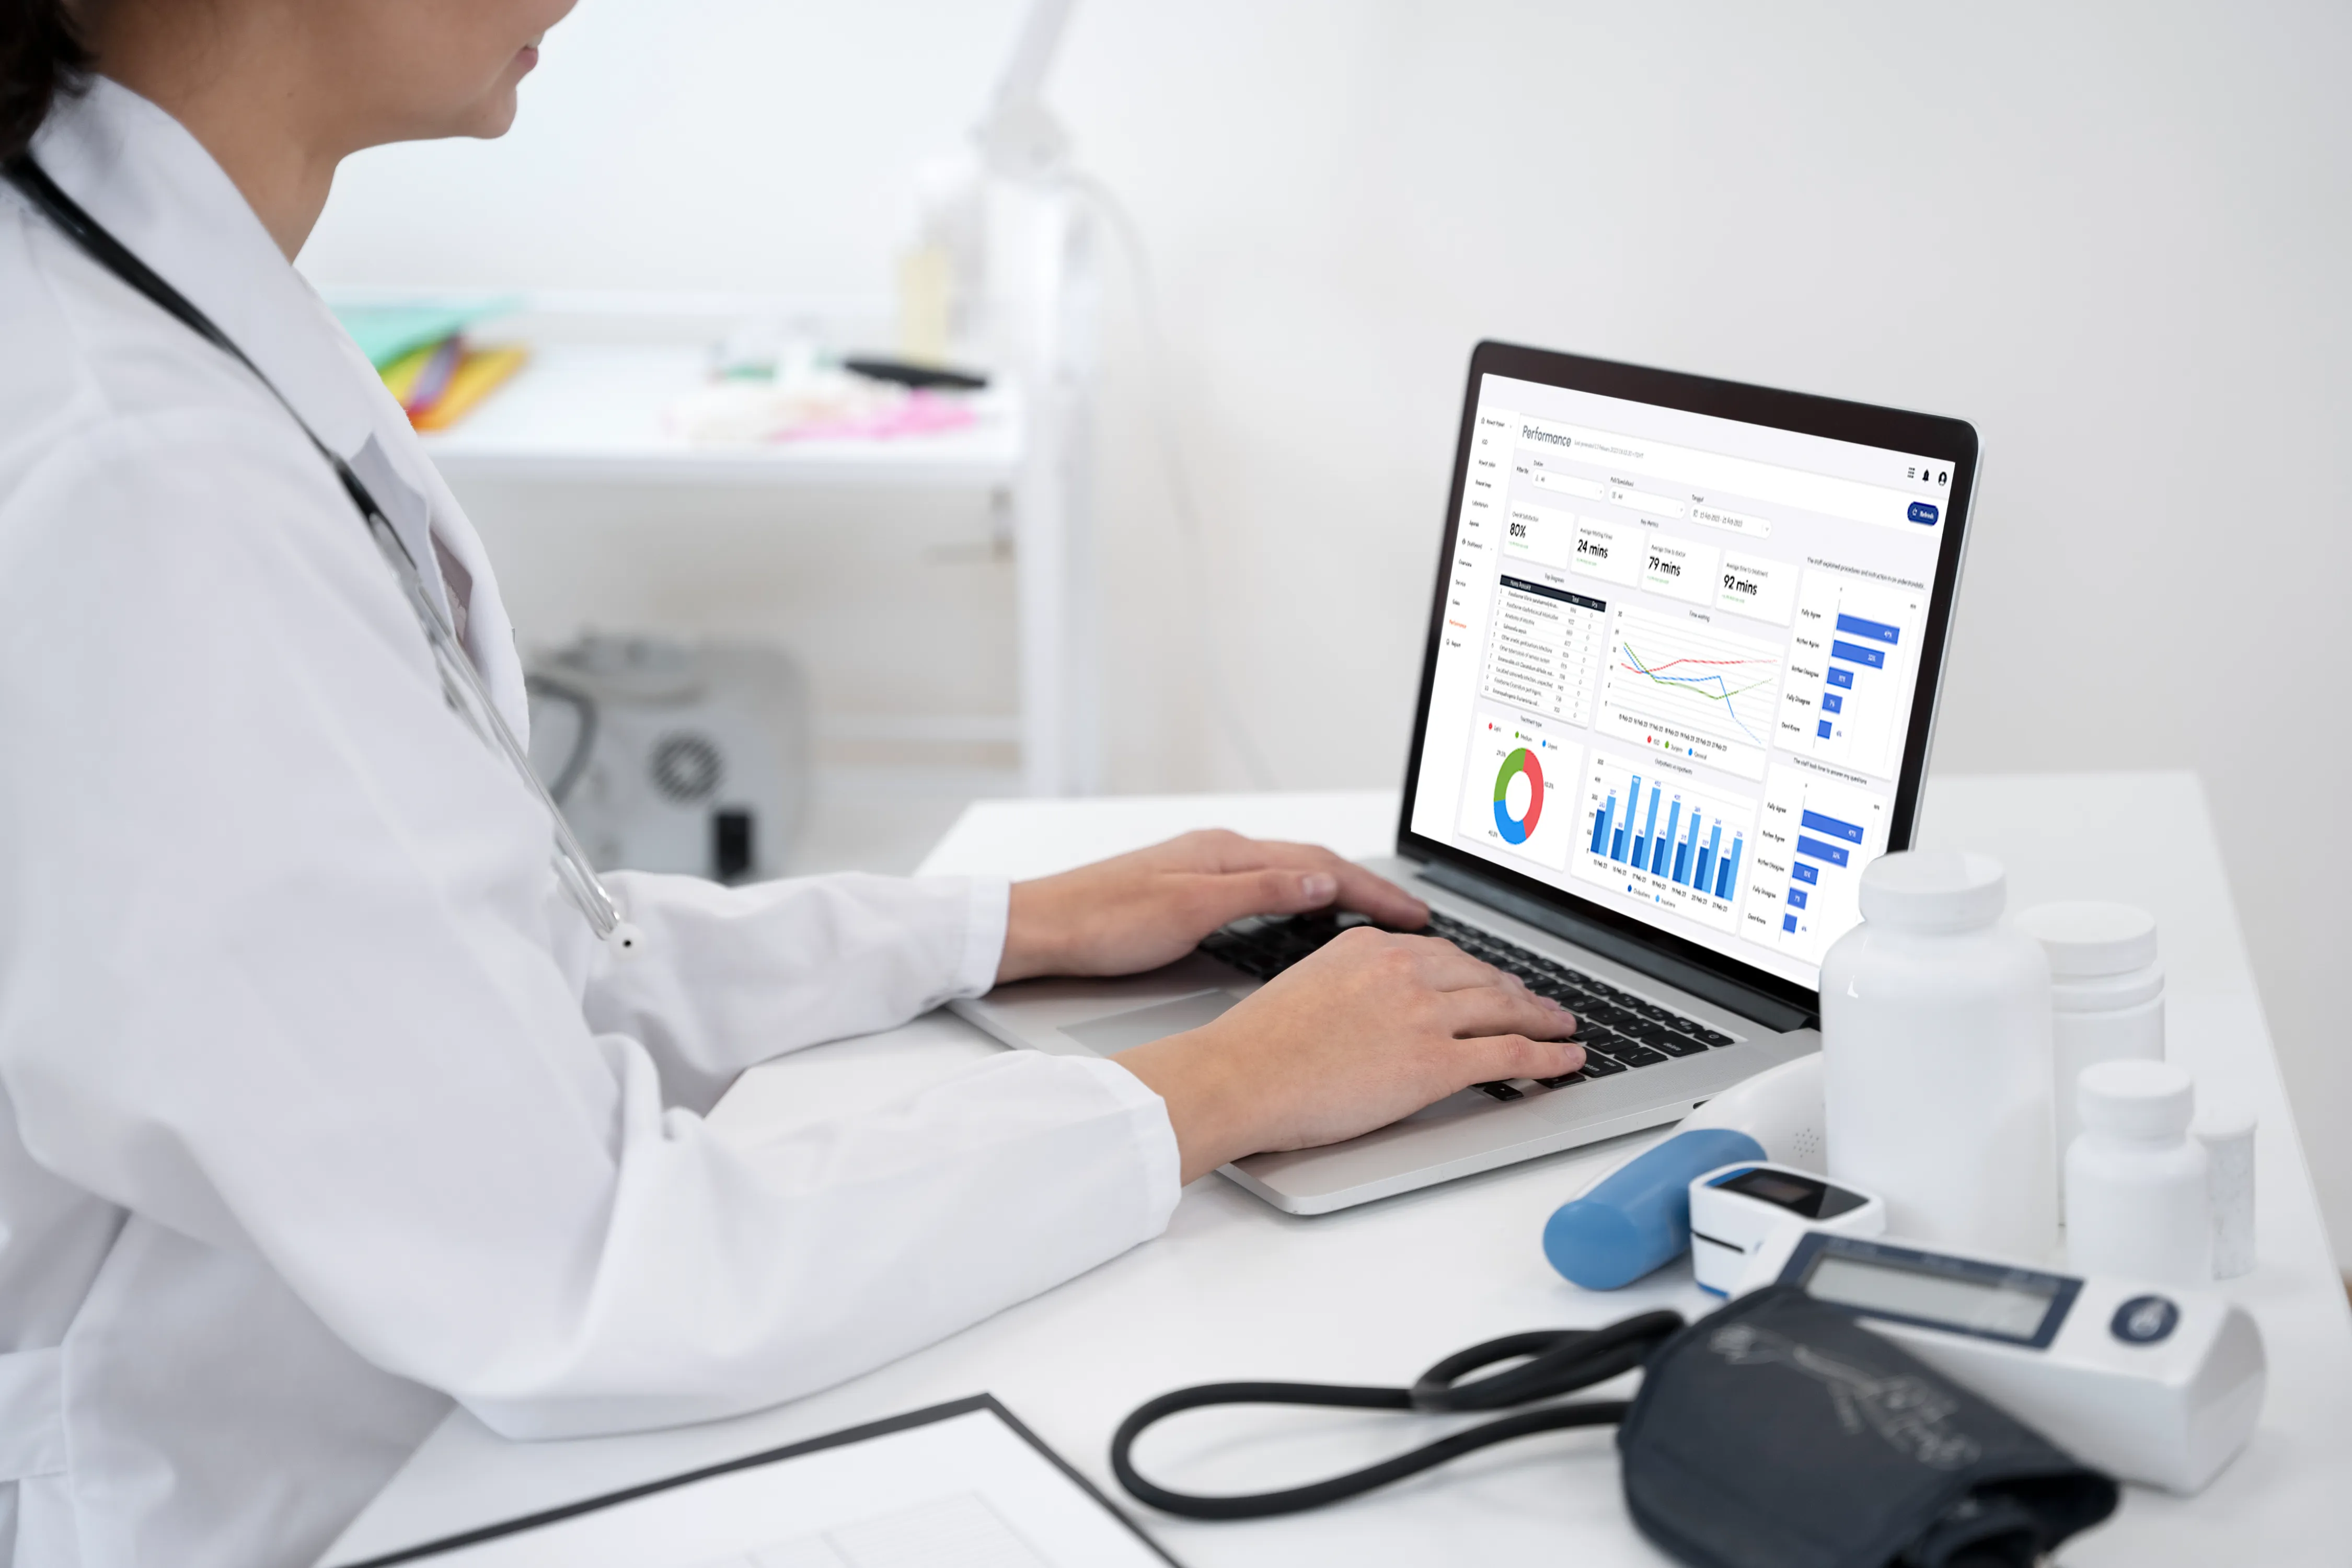 hospital information system data analytics dashboard